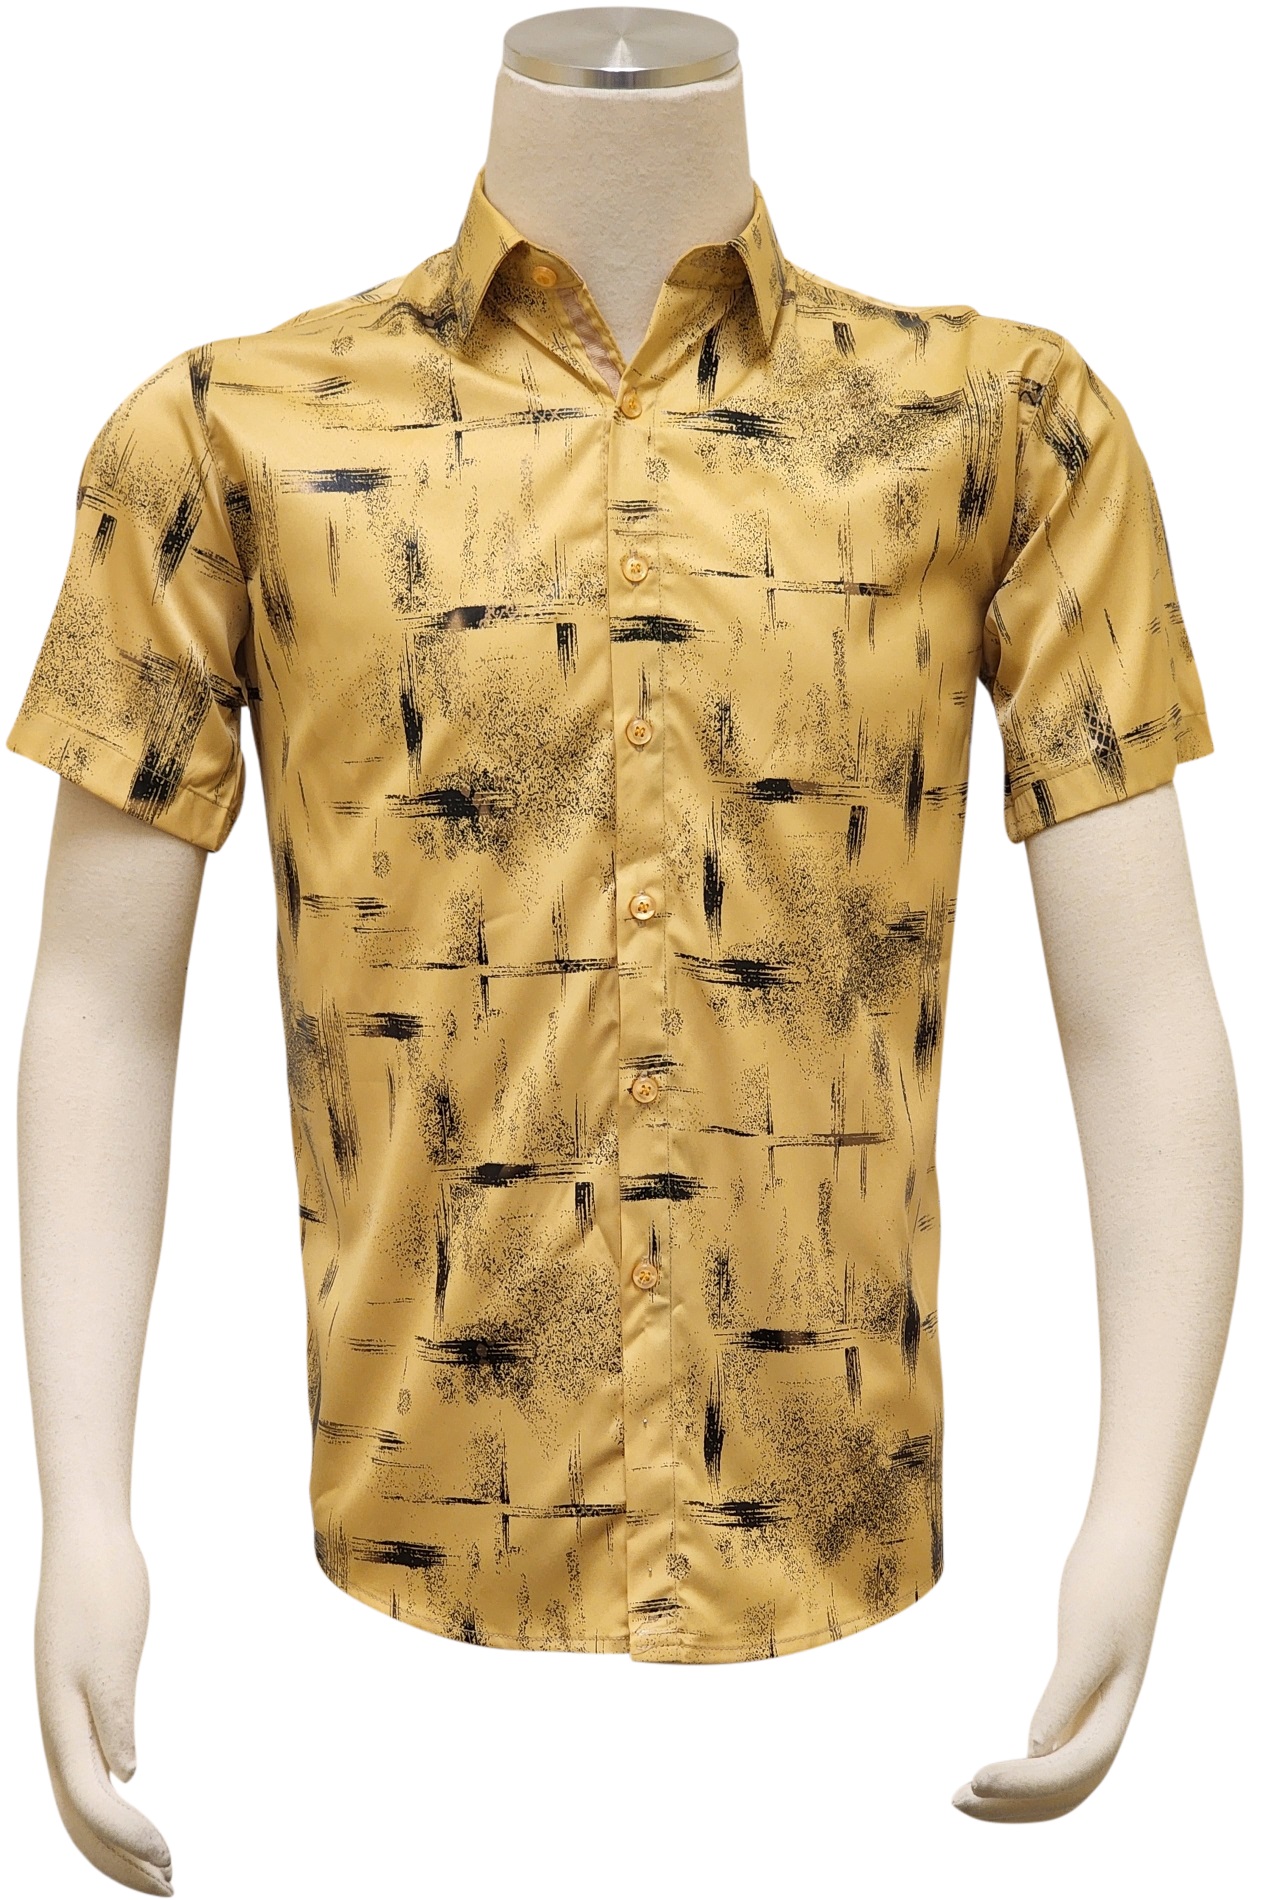 Cielo Straw Yellow / Black Metallic Brush Stroke Short Sleeve Shirt S18012